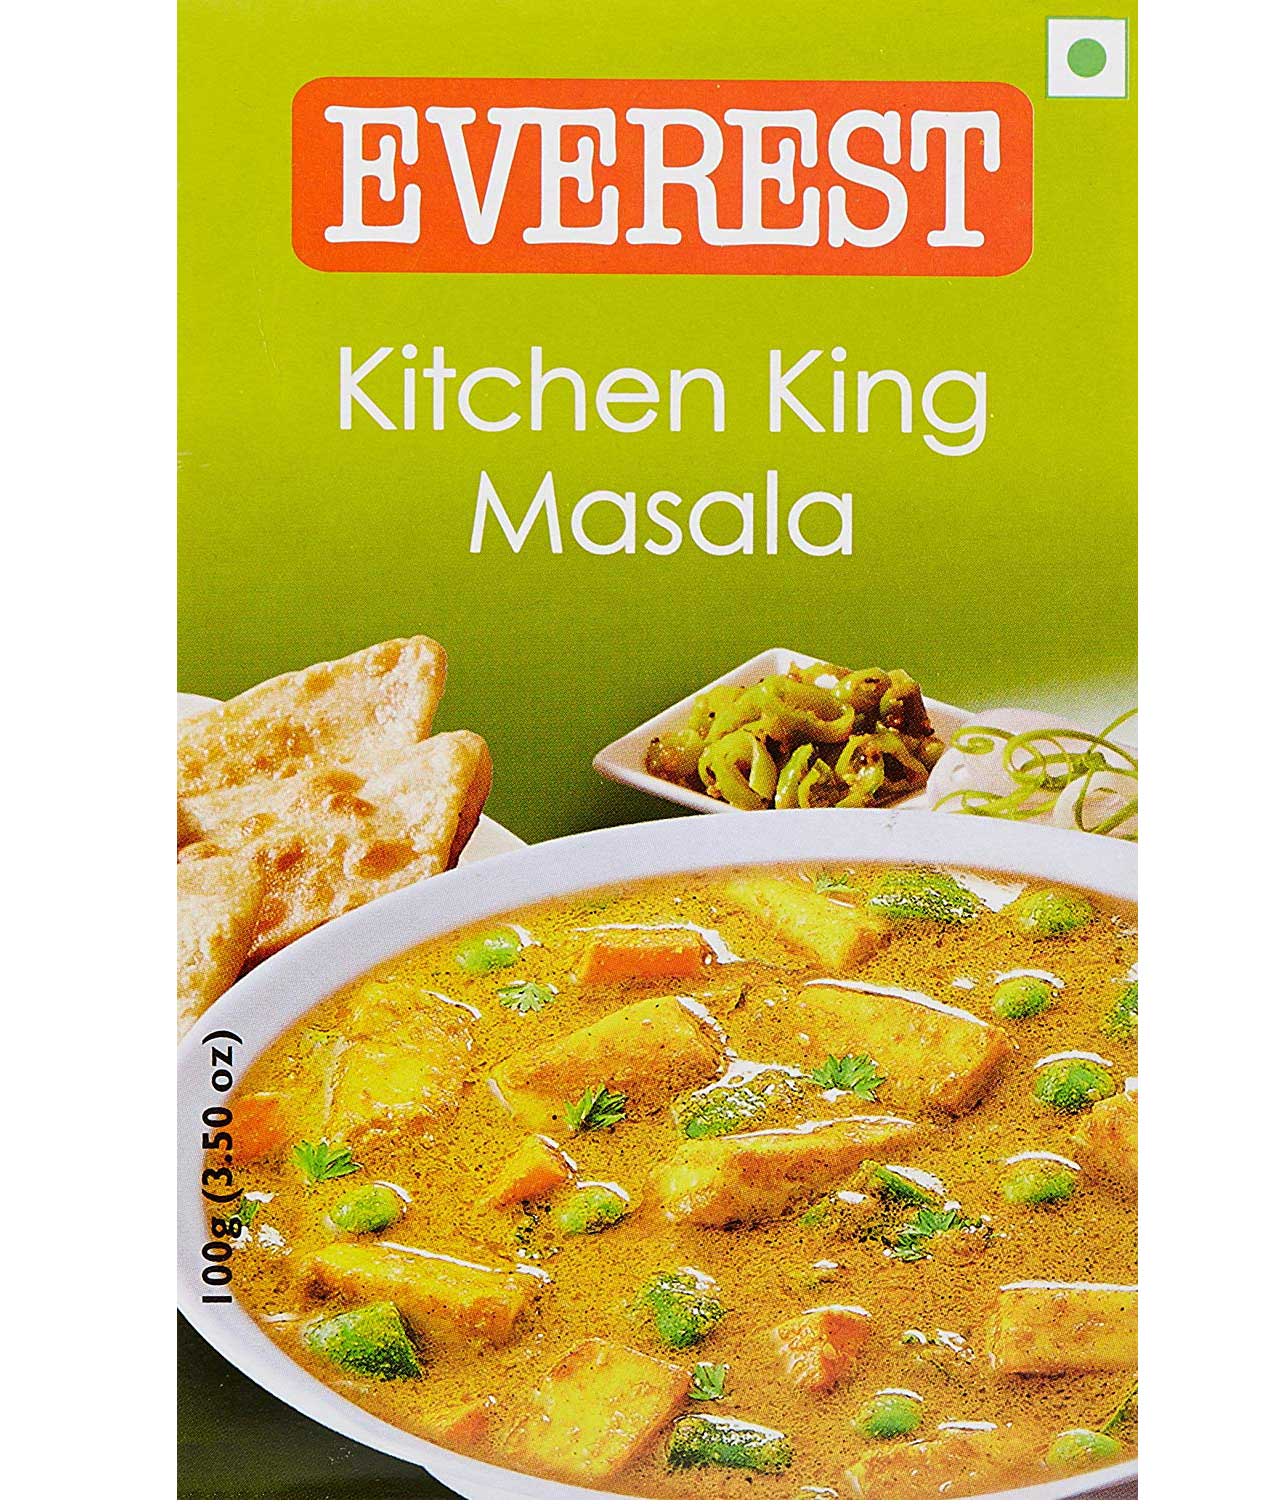 Everest Masala, Kitchen King, 100gm Carton